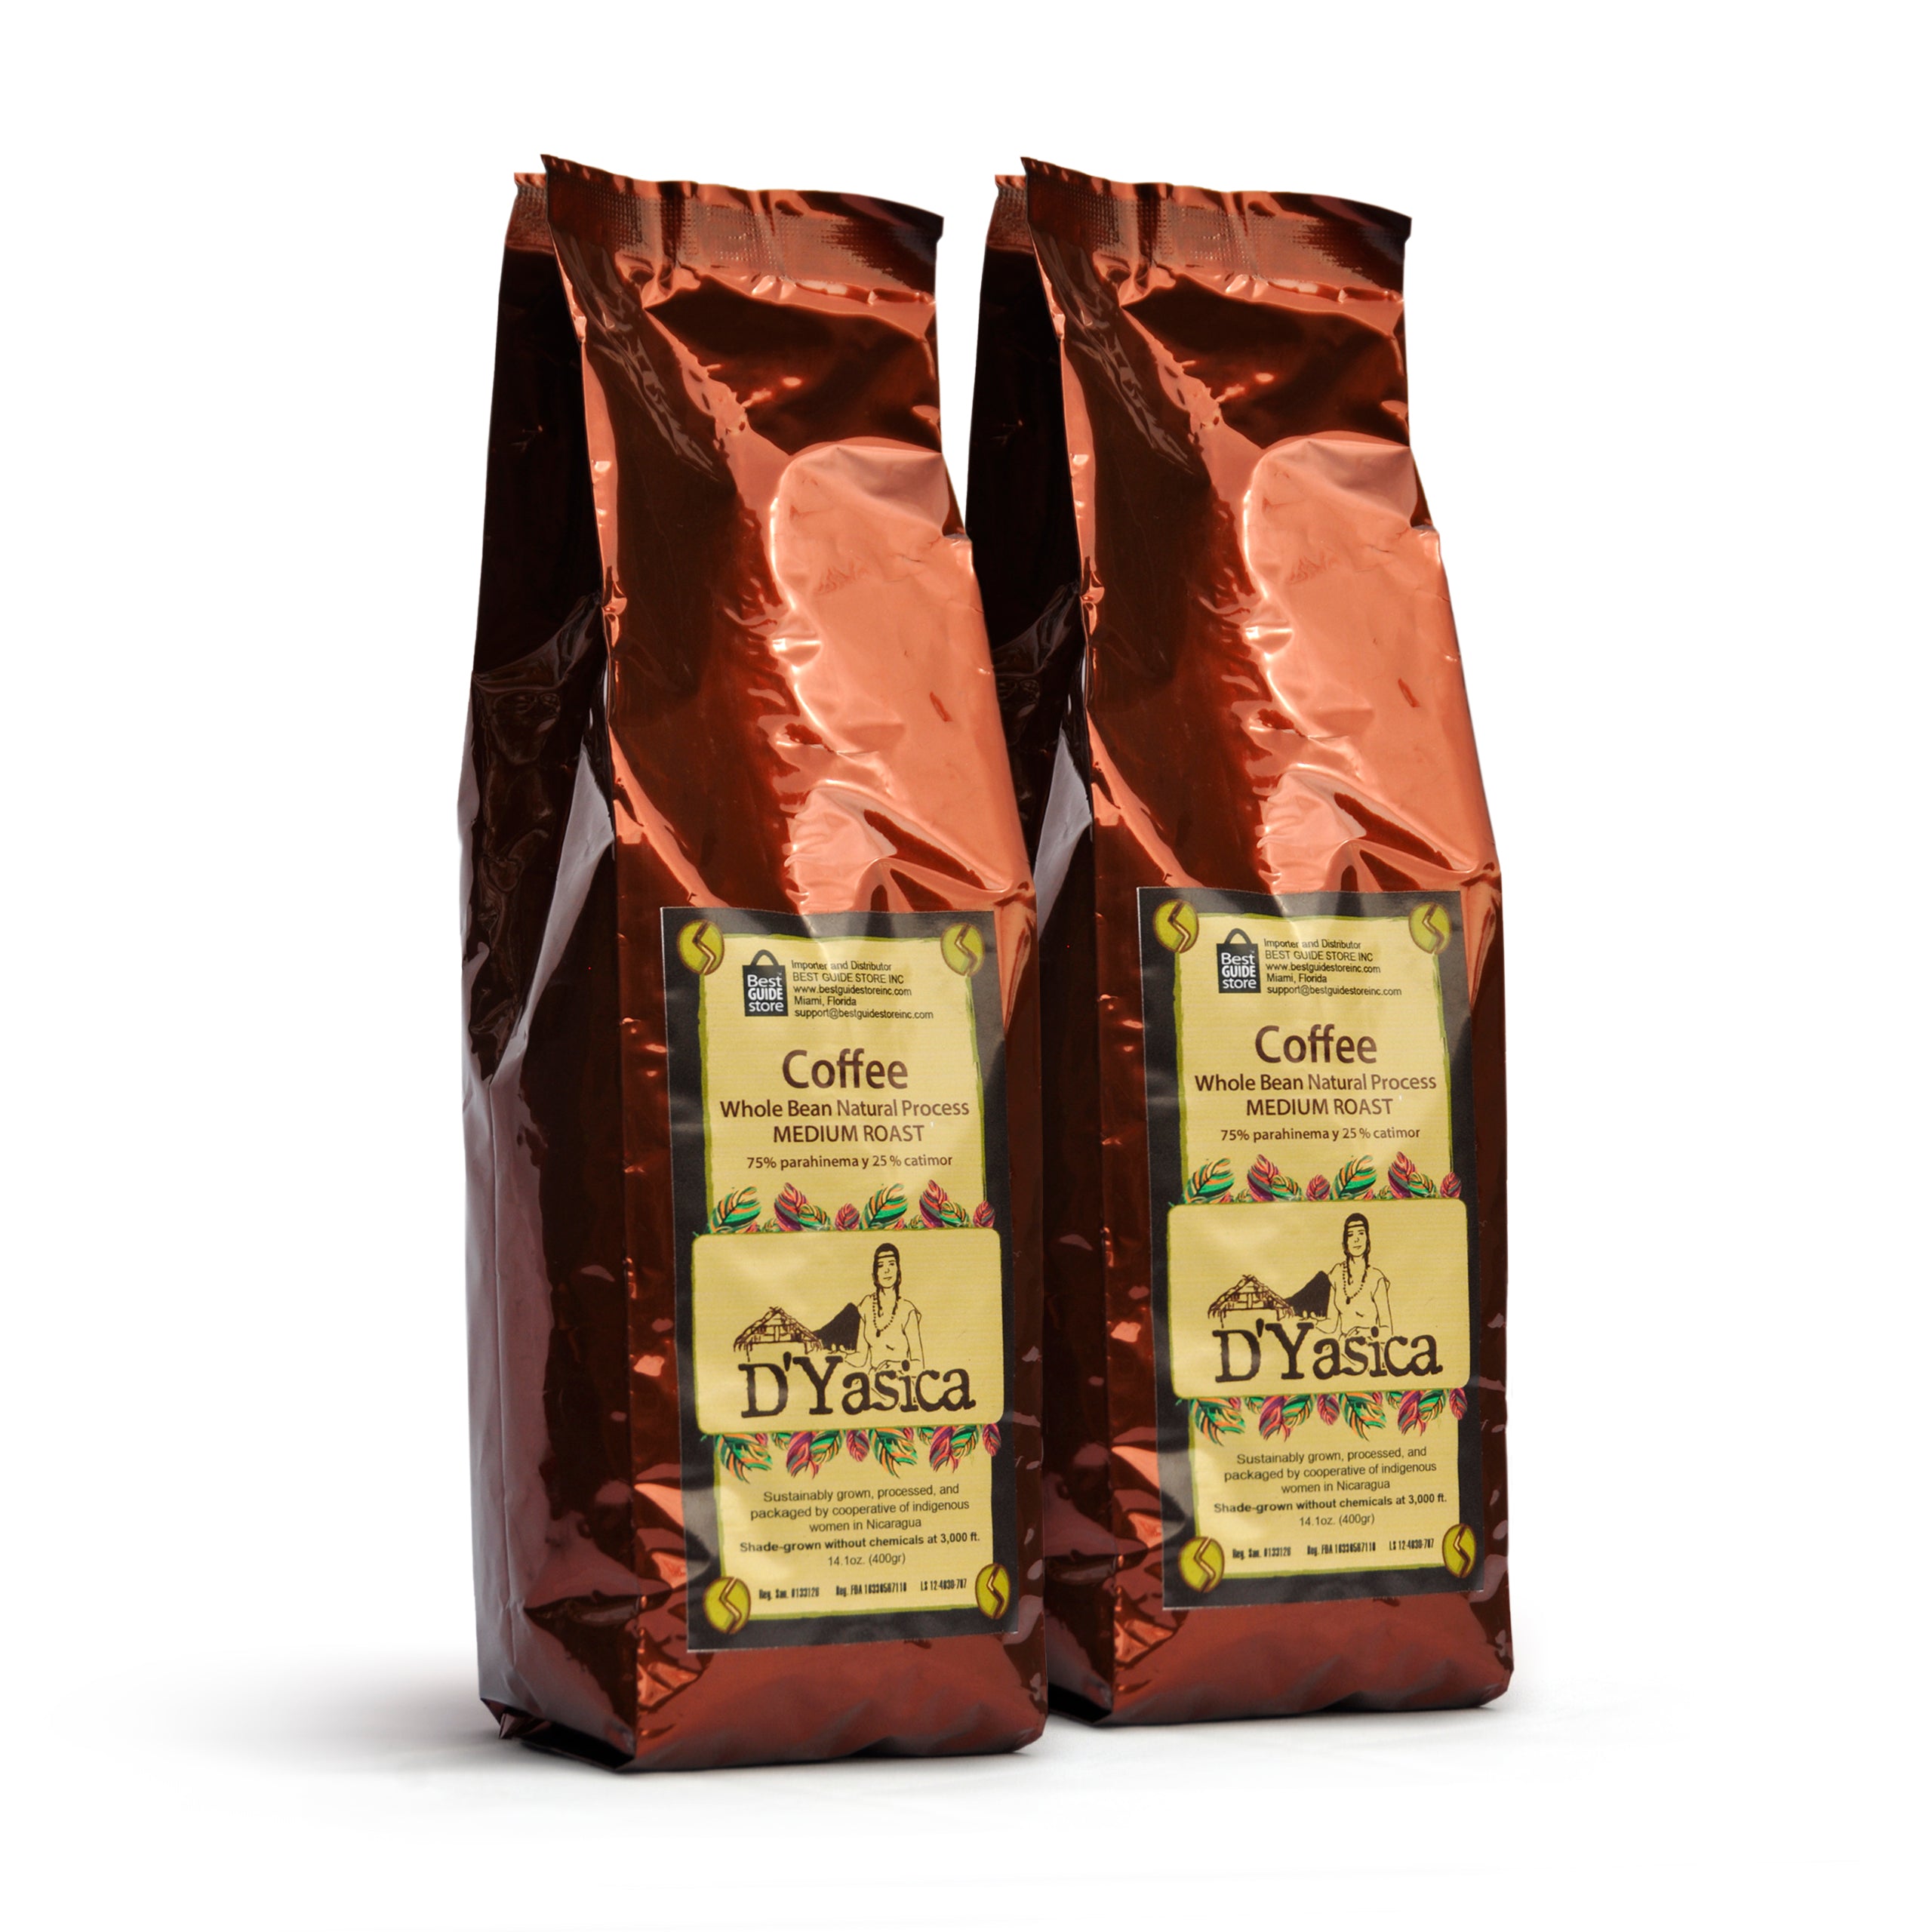 Coffee Natural process whole bean - Mediun Roast